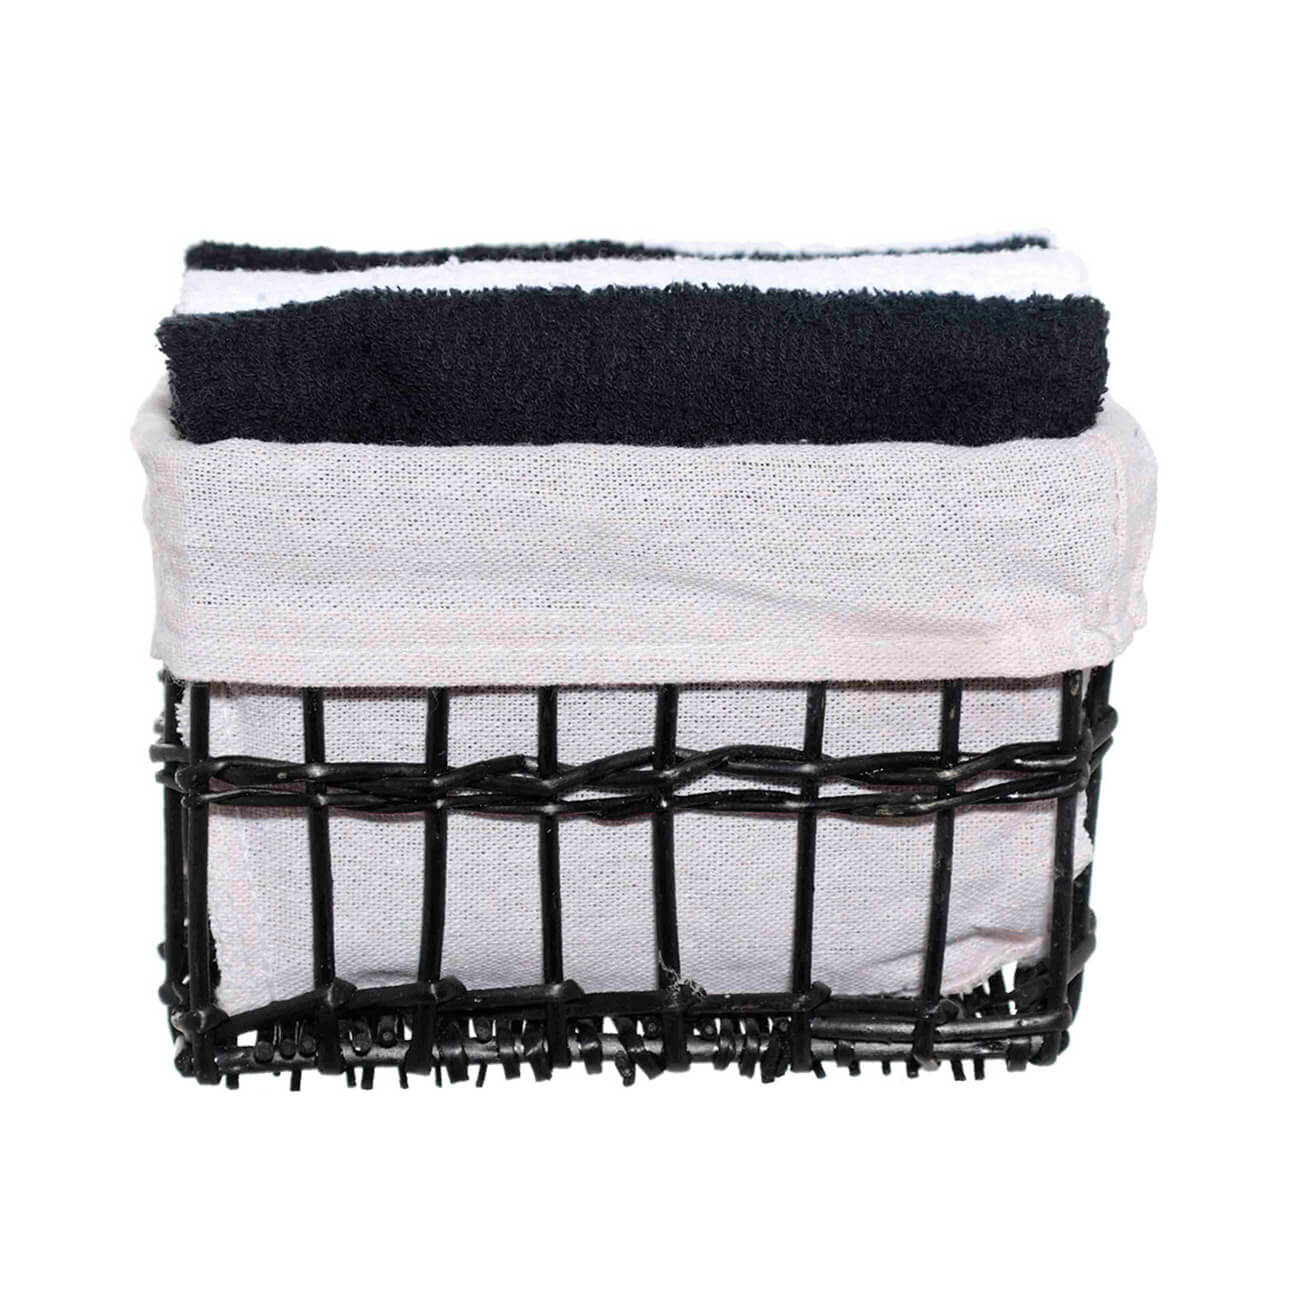 Полотенце, 30х30 см, 4 шт, в корзине, хлопок/лоза, черное/белое, Basket towel полотенце вечер бриз р 40х70